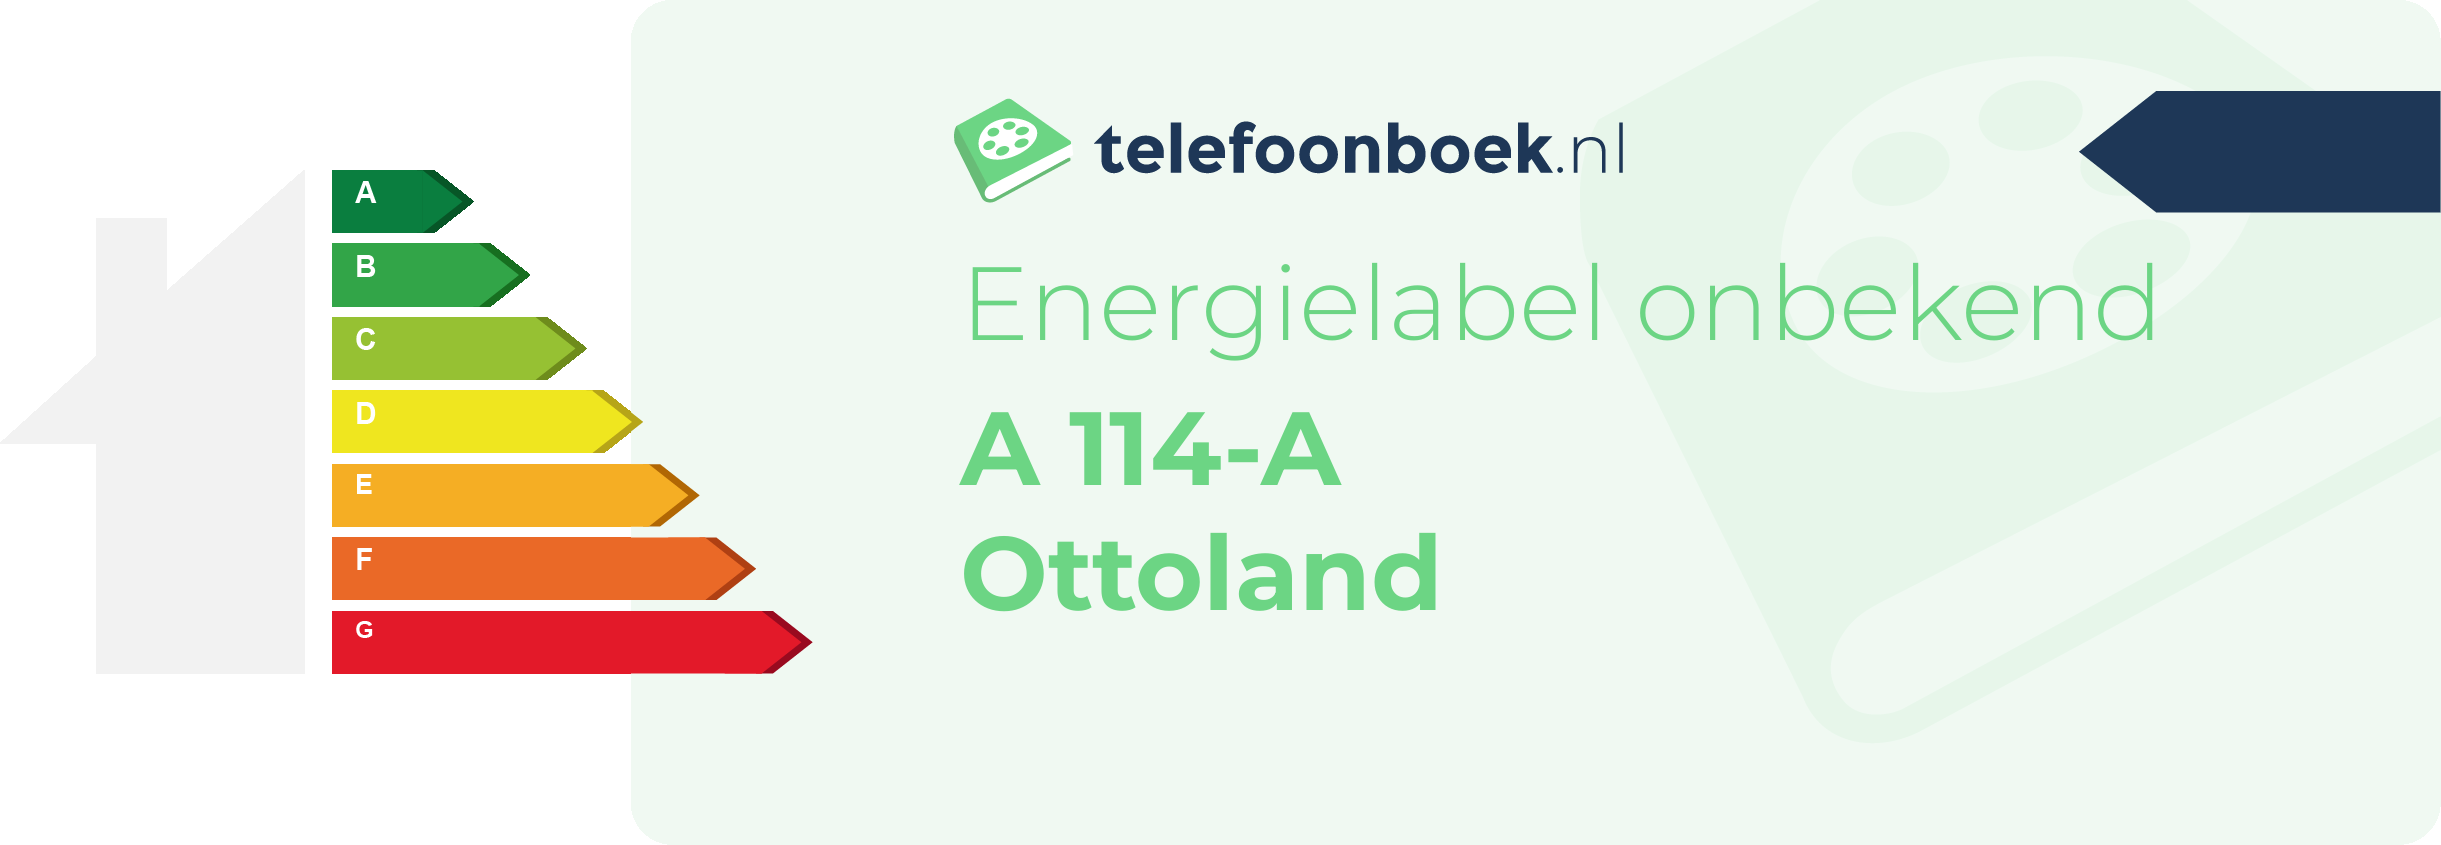 Energielabel A 114-A Ottoland